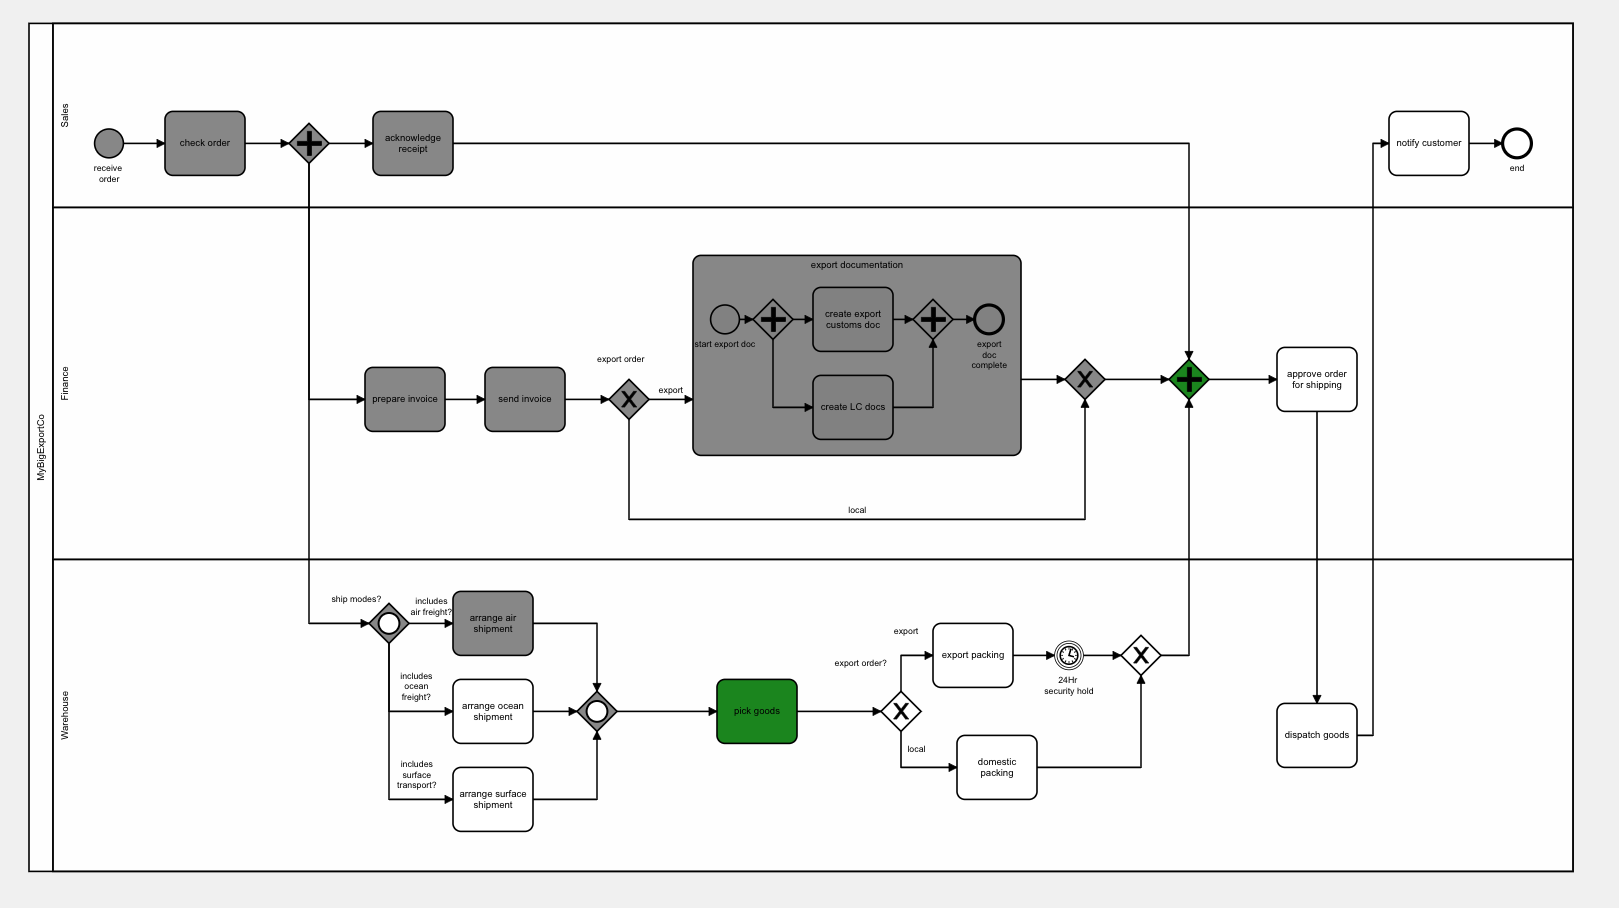 Example Process running